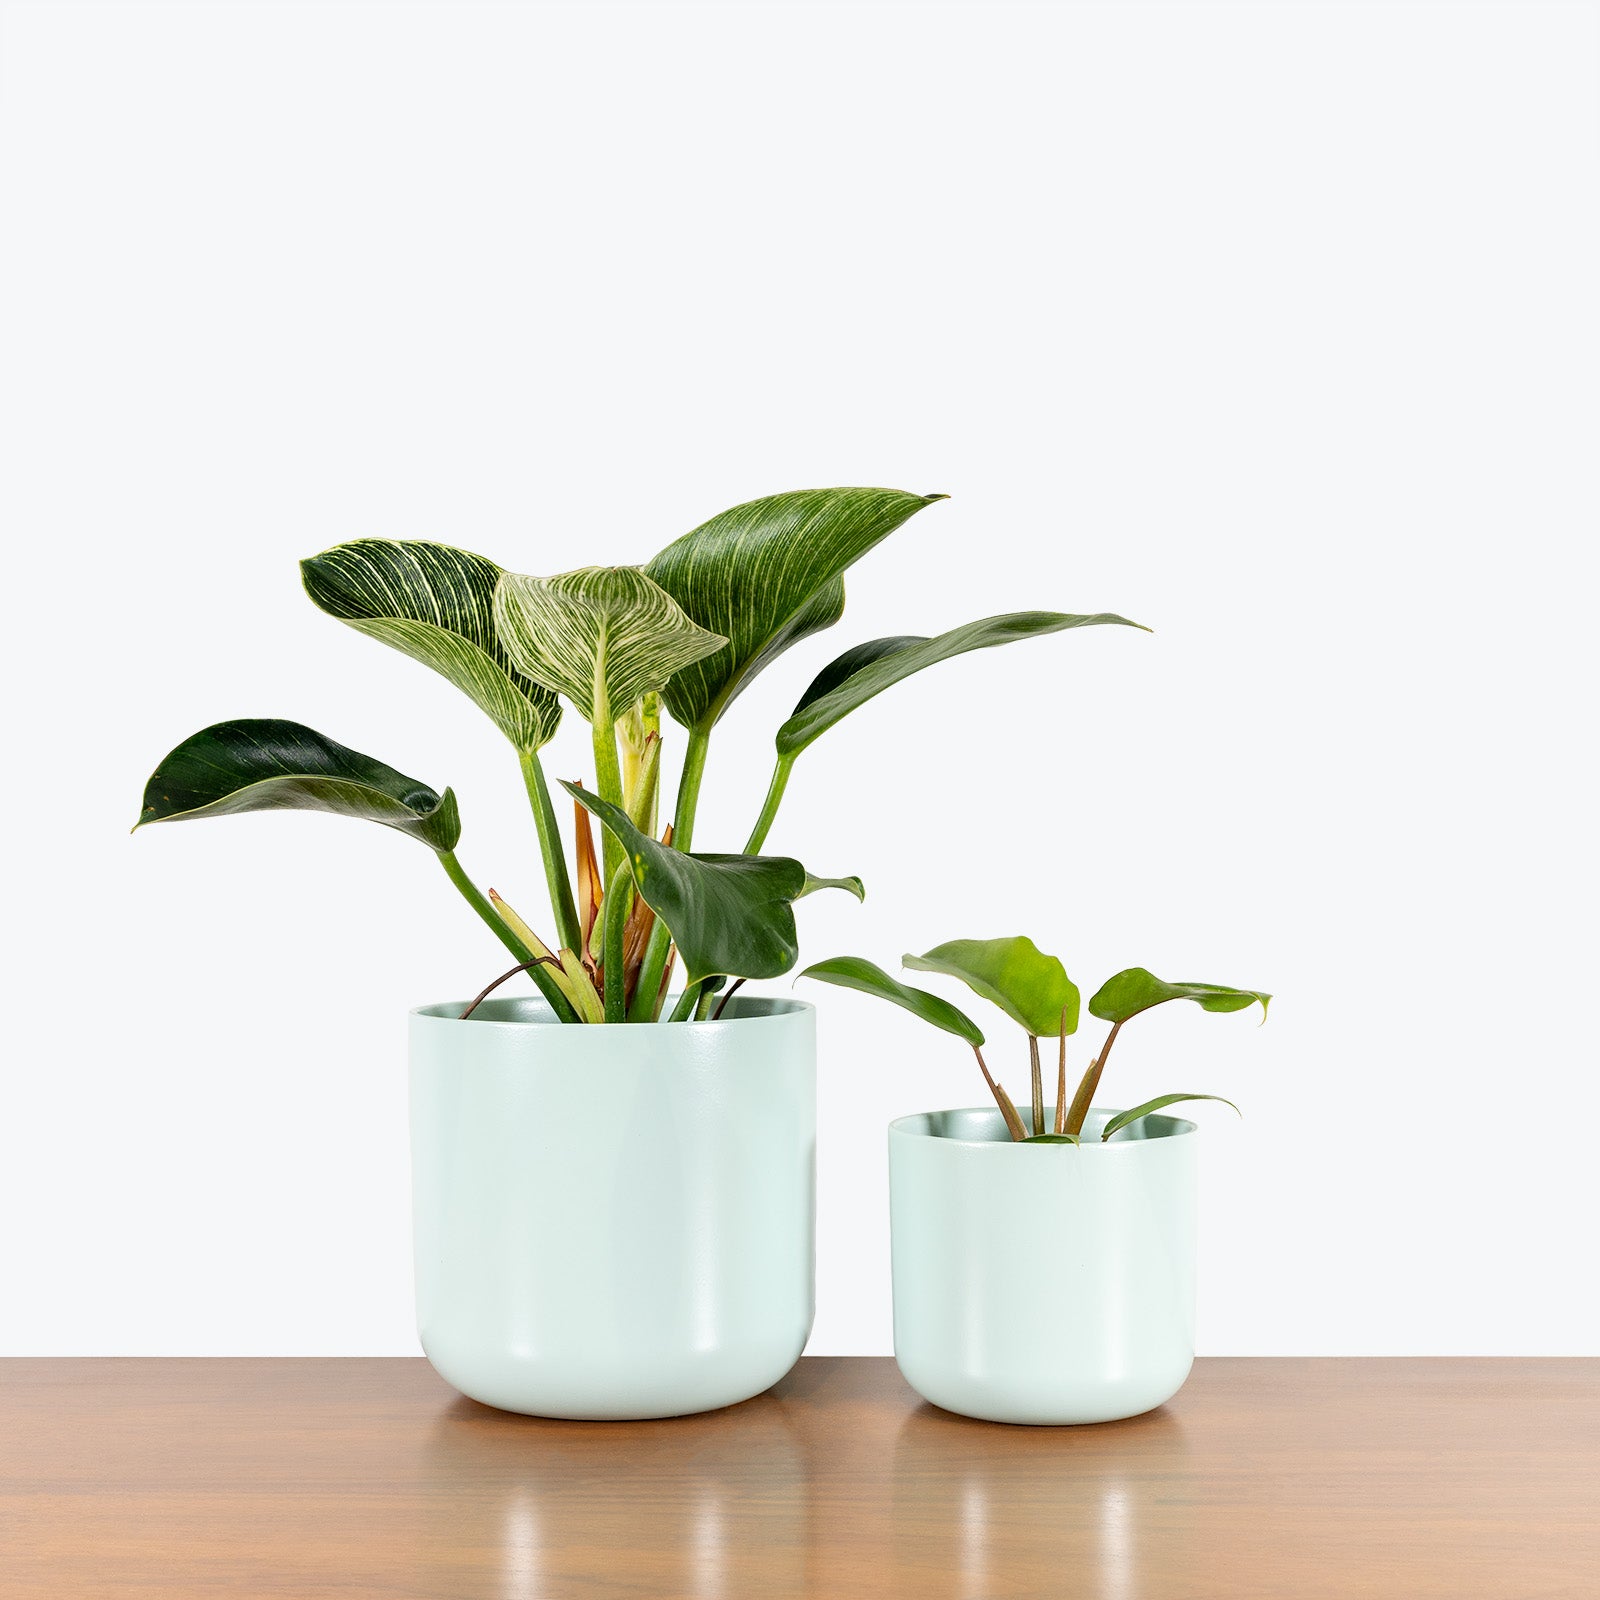 Teal Ceramic Planter - House Plants Delivery Toronto - JOMO Studio